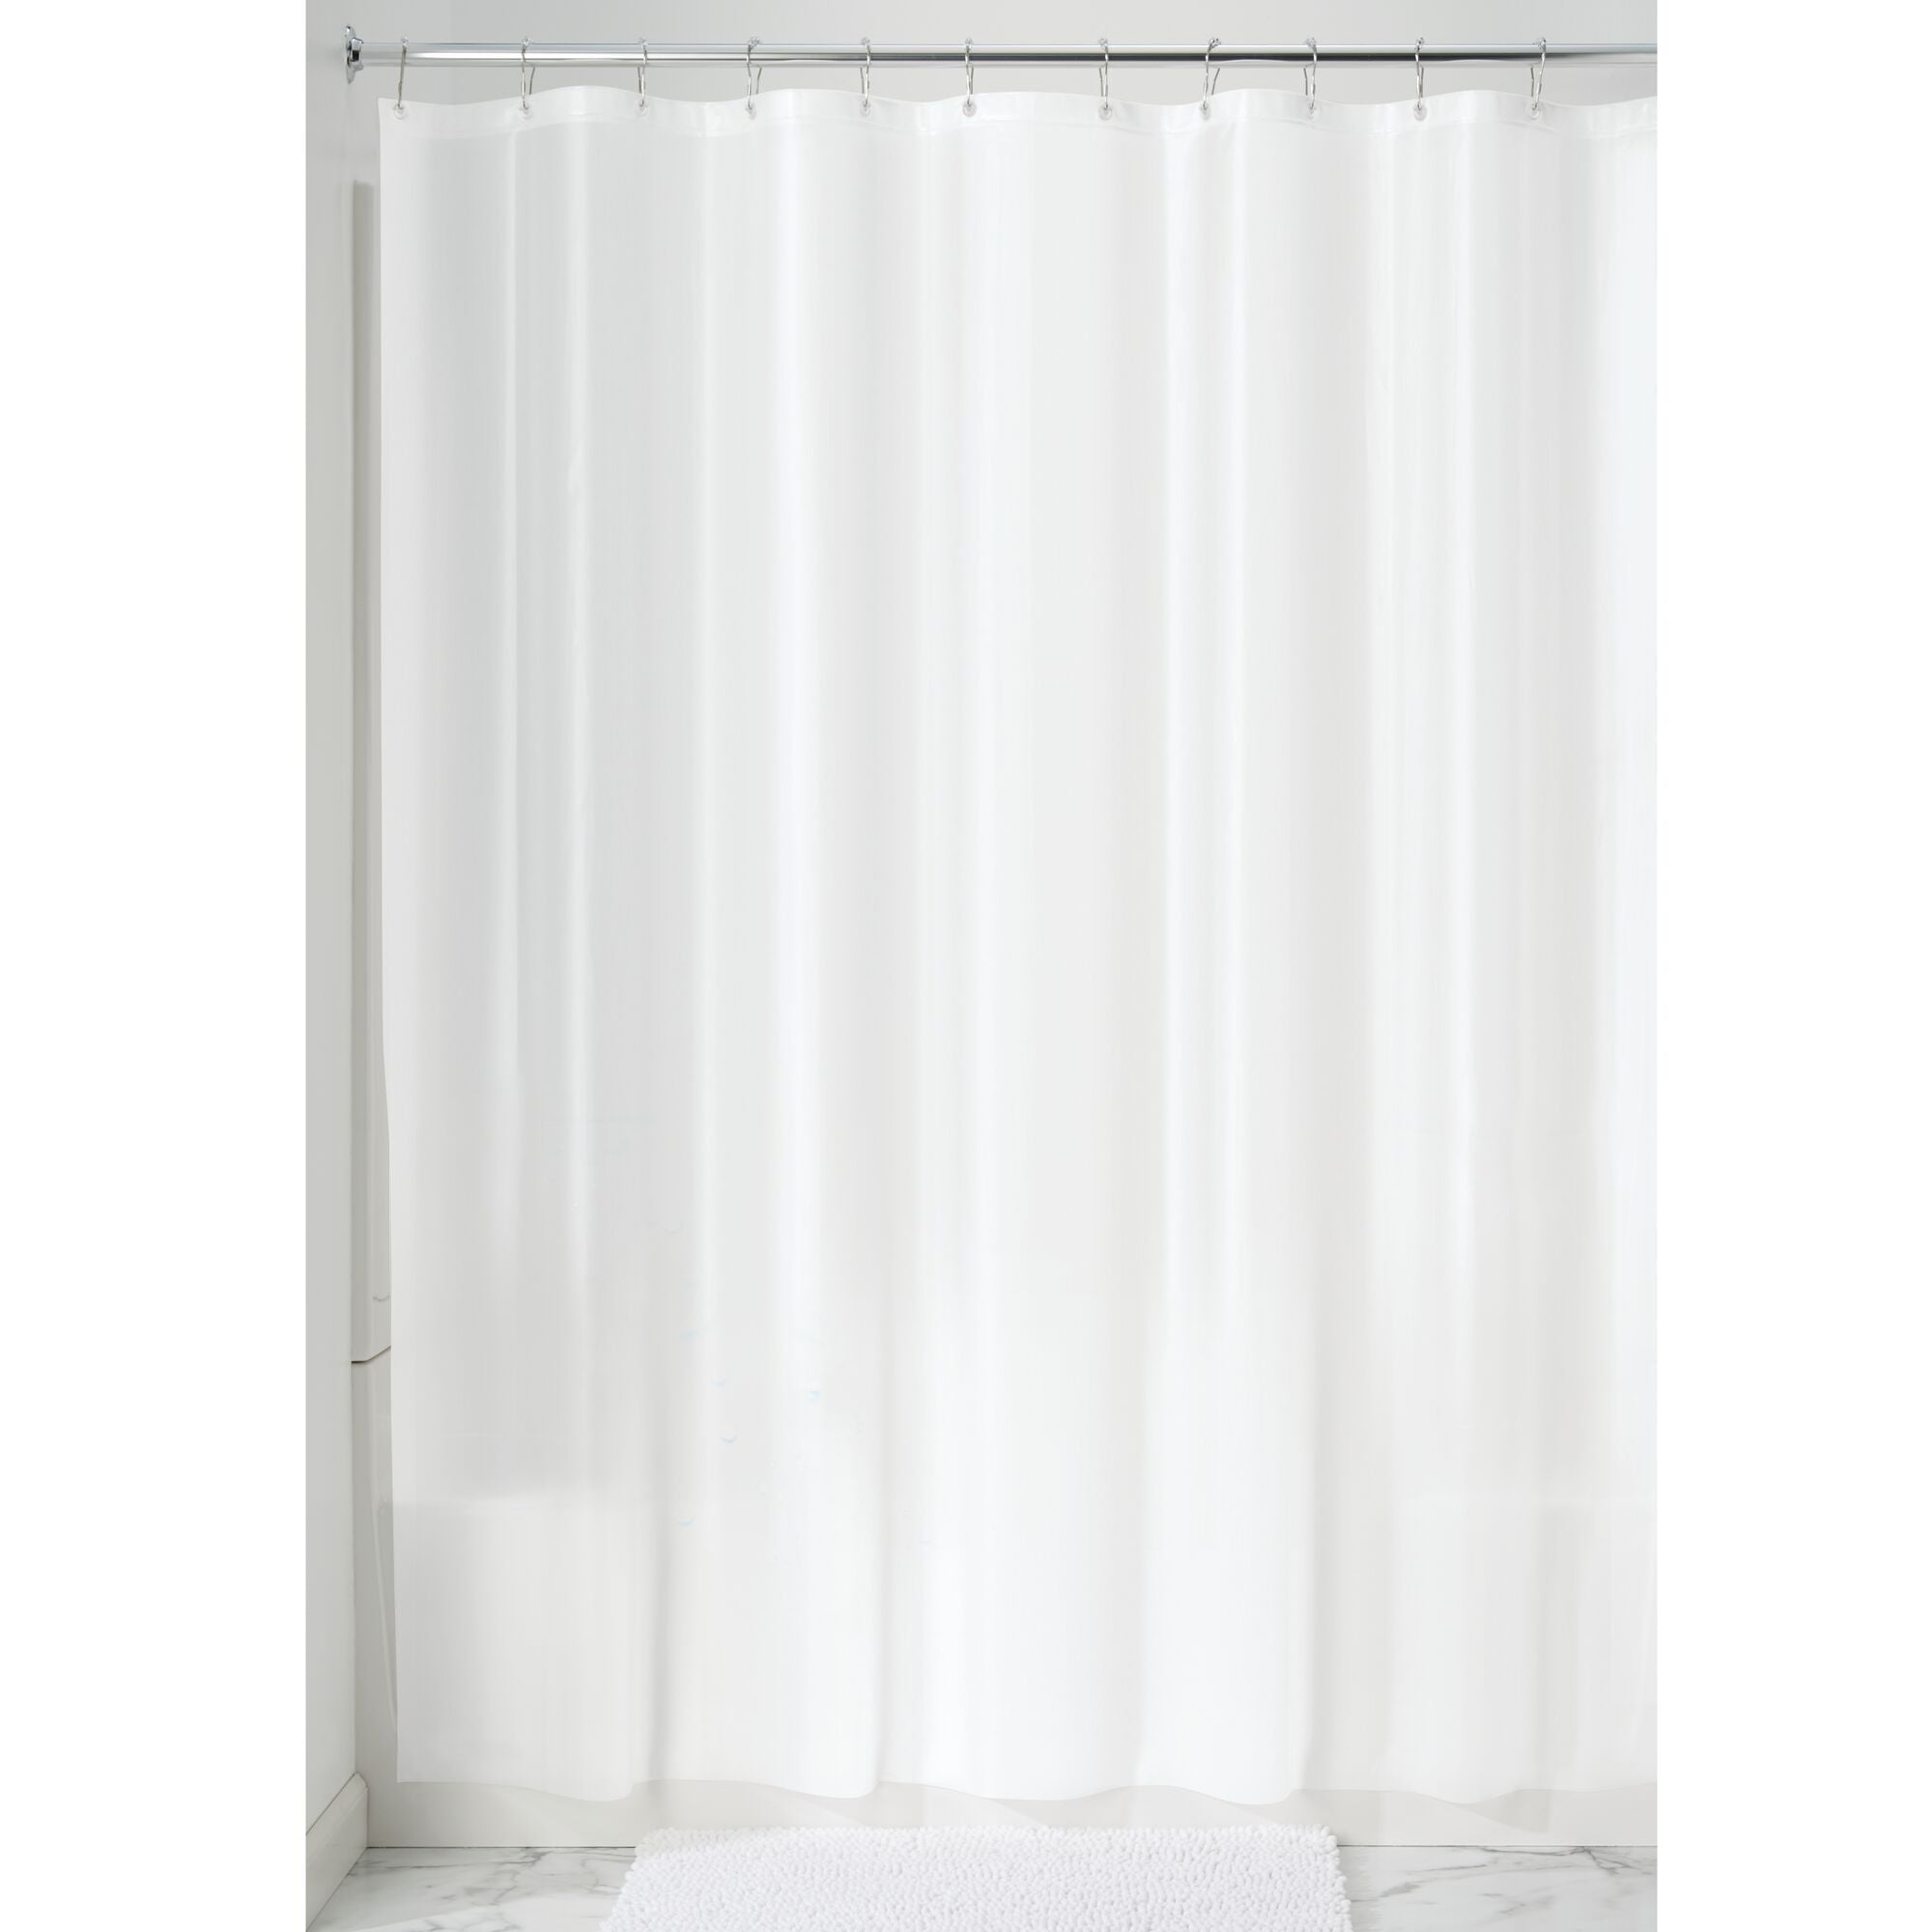 Interdesign Peva 3 Gauge Shower Curtain, Do All Shower Curtains Need Liners